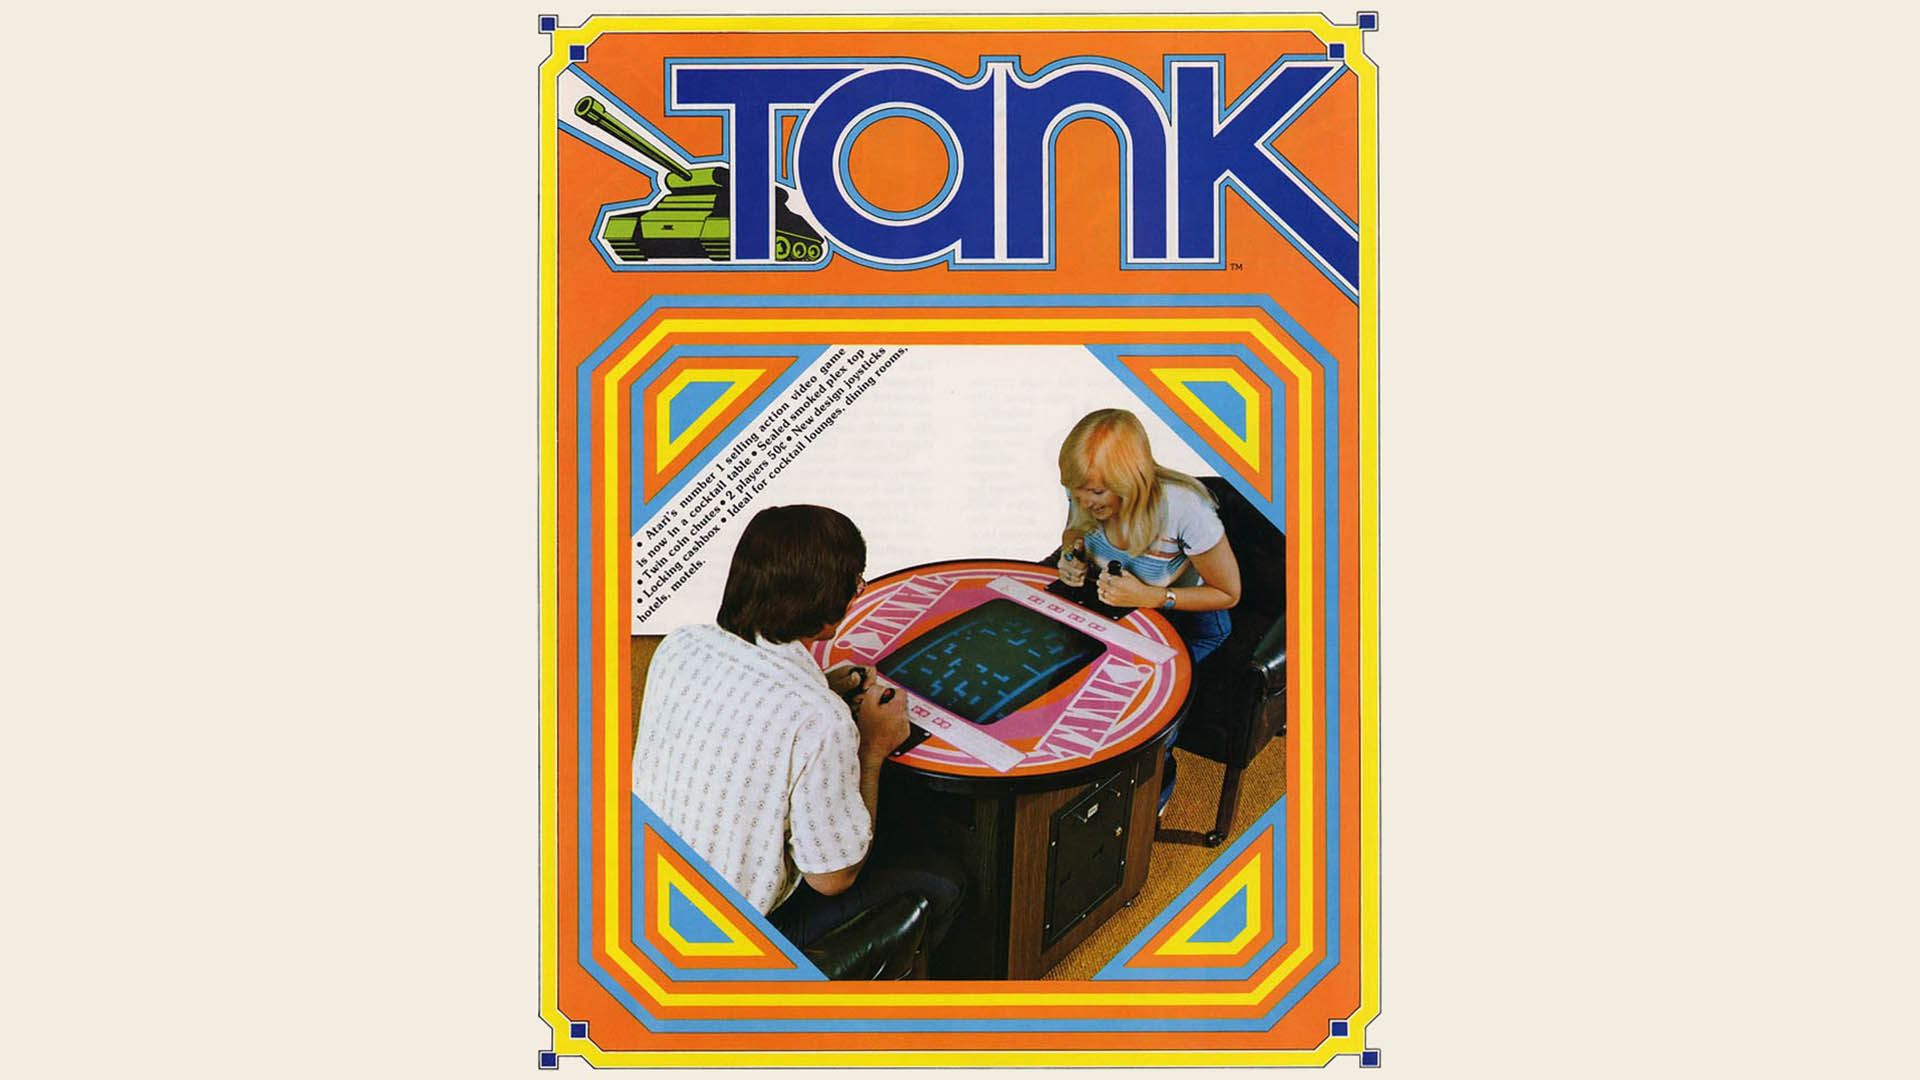 tank video game  Image of tank video game